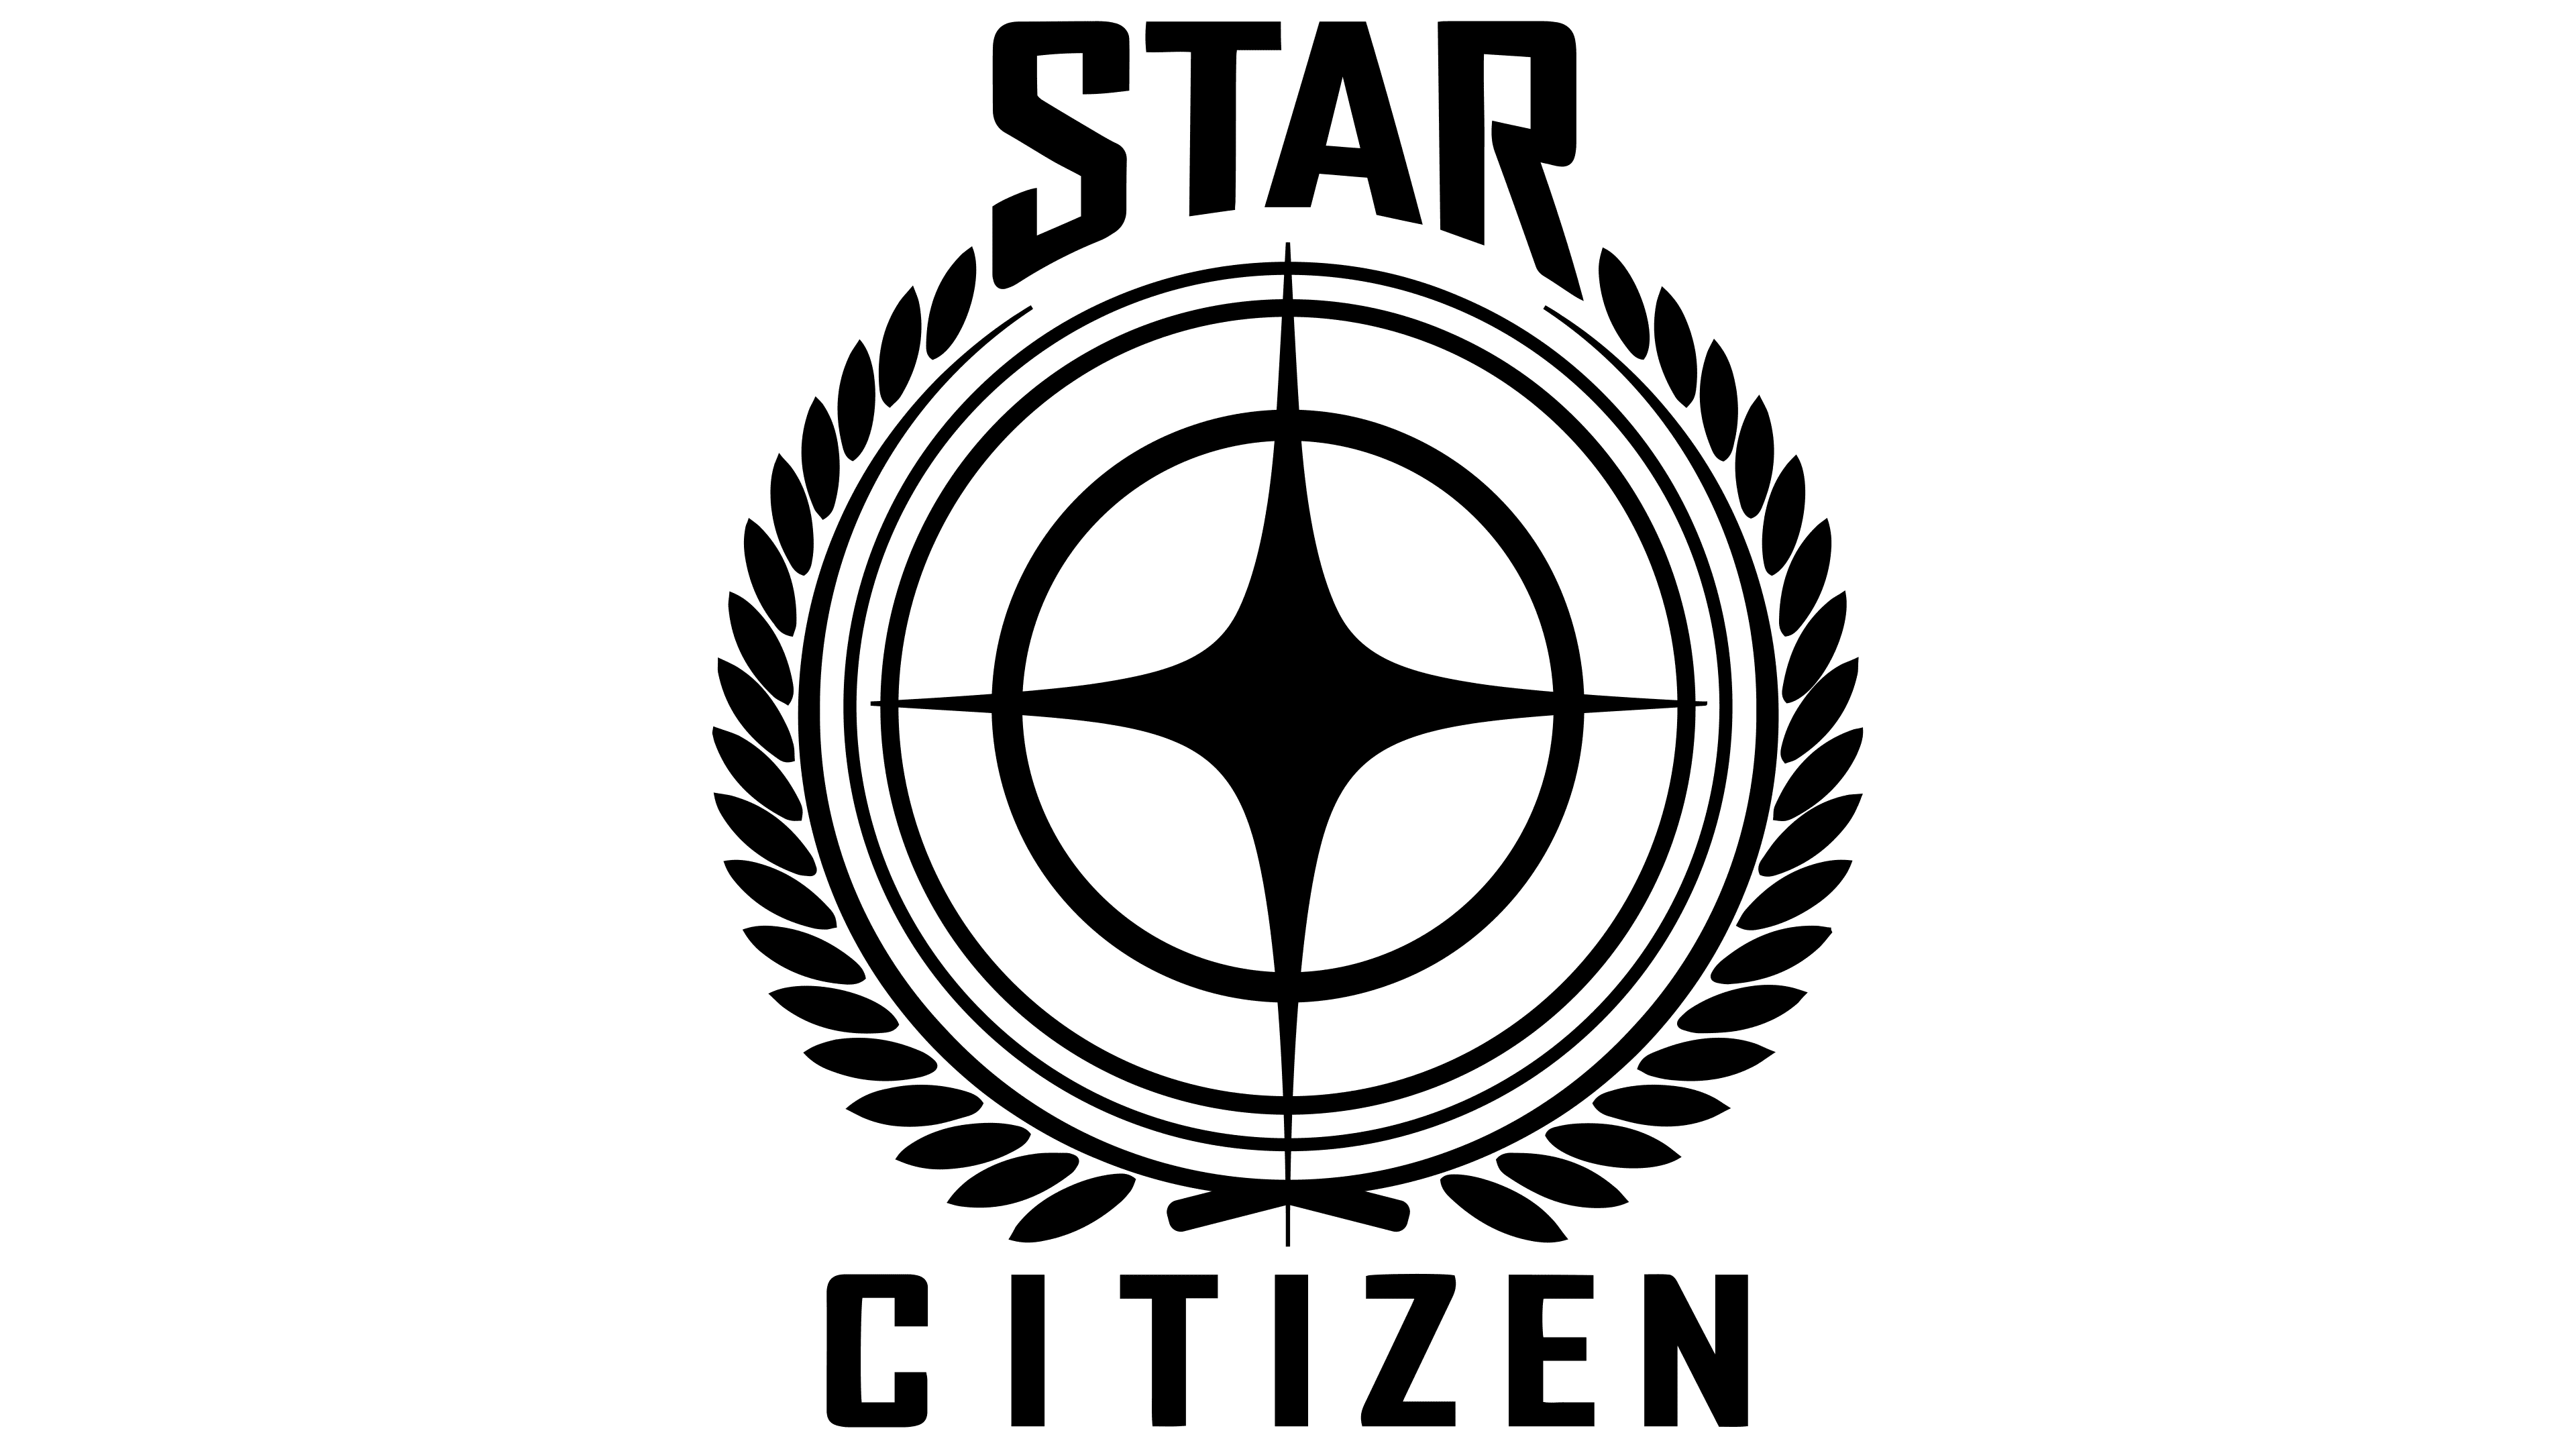 Arriba 36+ imagen star citizen logo